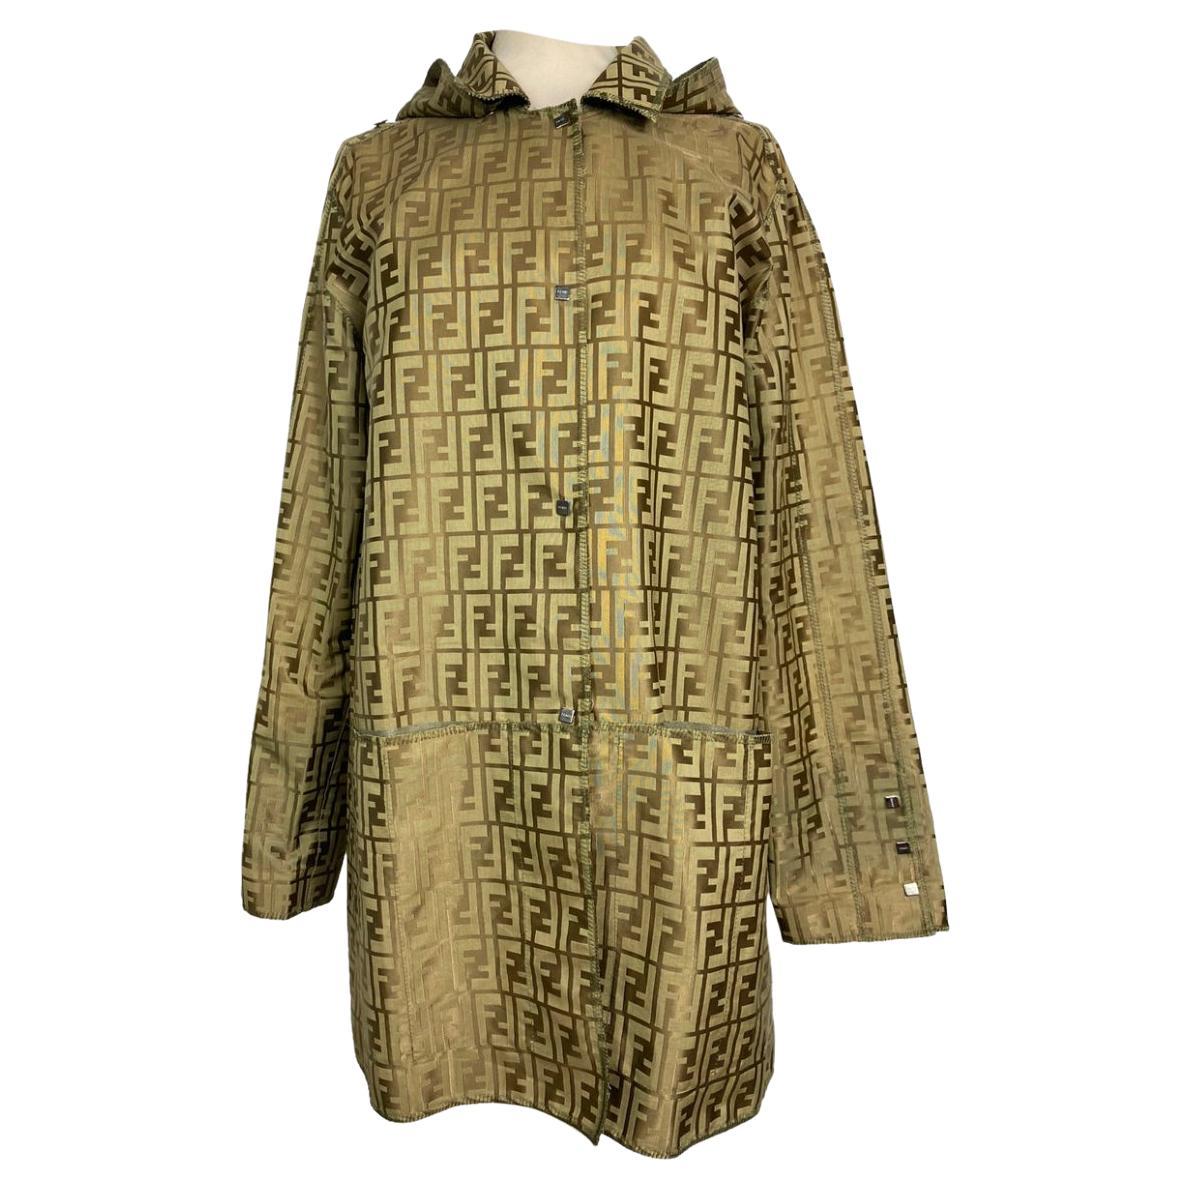 Fendi windcoat totally logoed gold color. For Sale